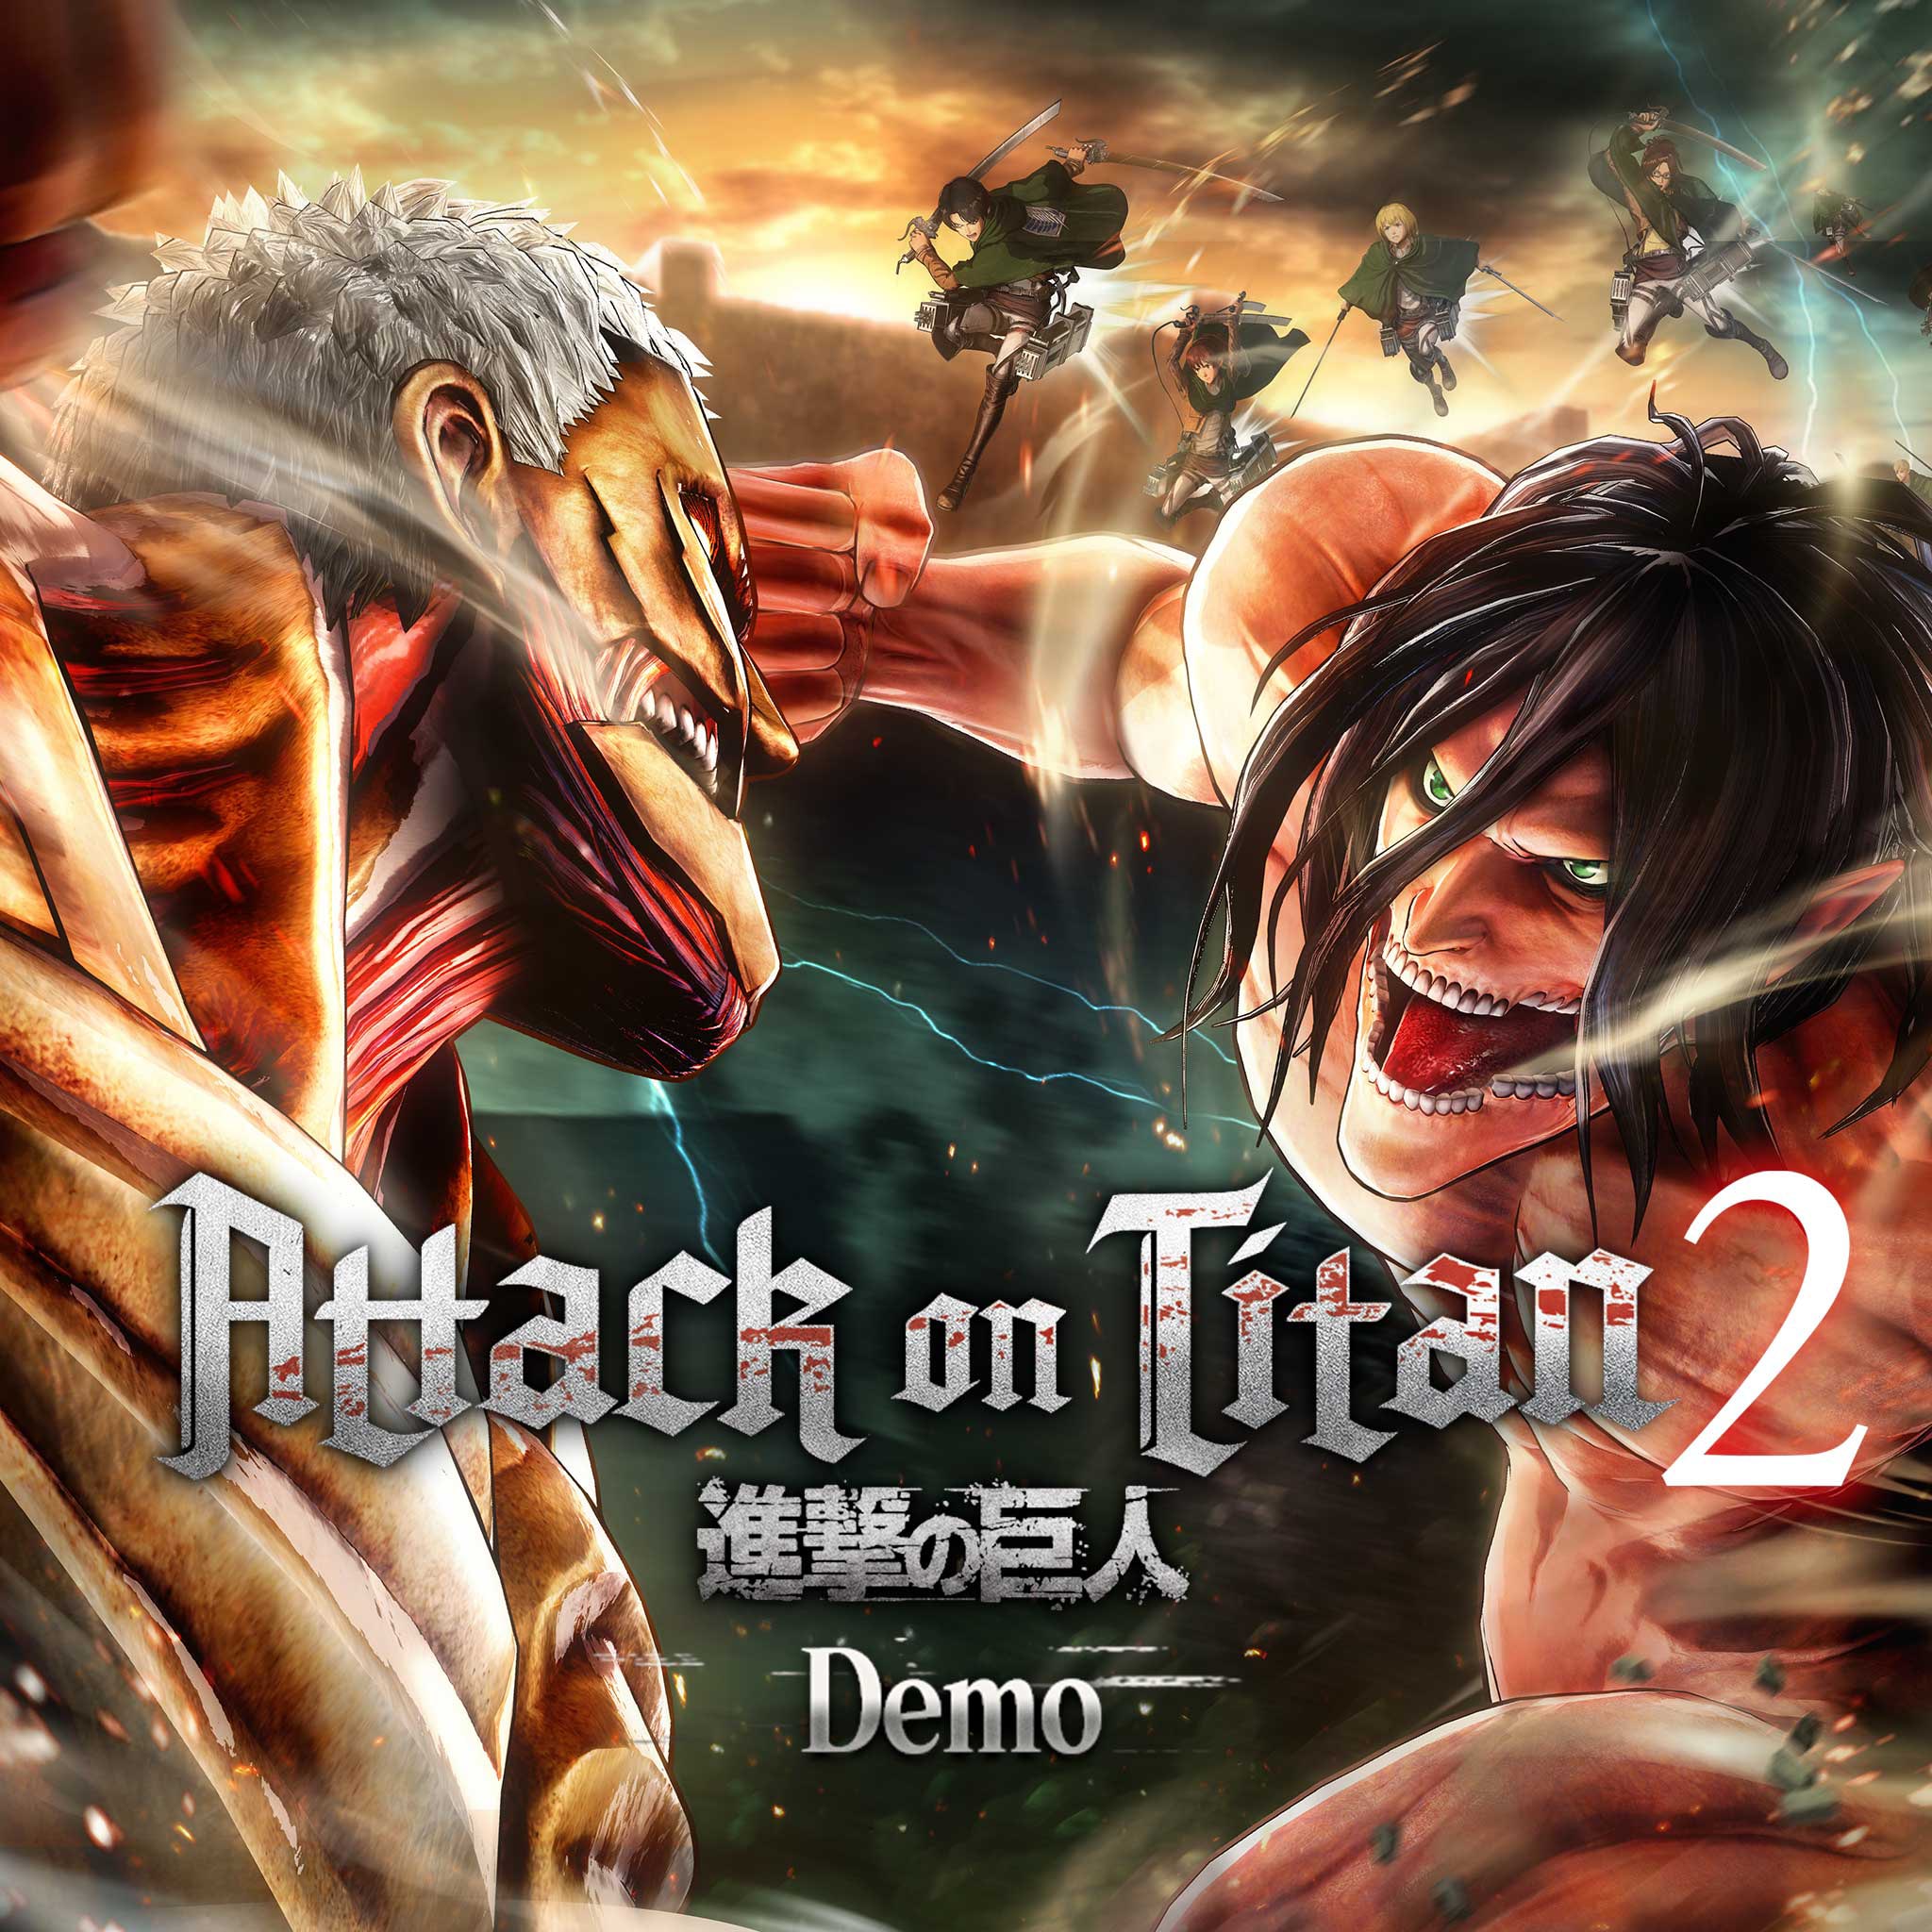 Assistir Attack on Titan: 4x22 Online